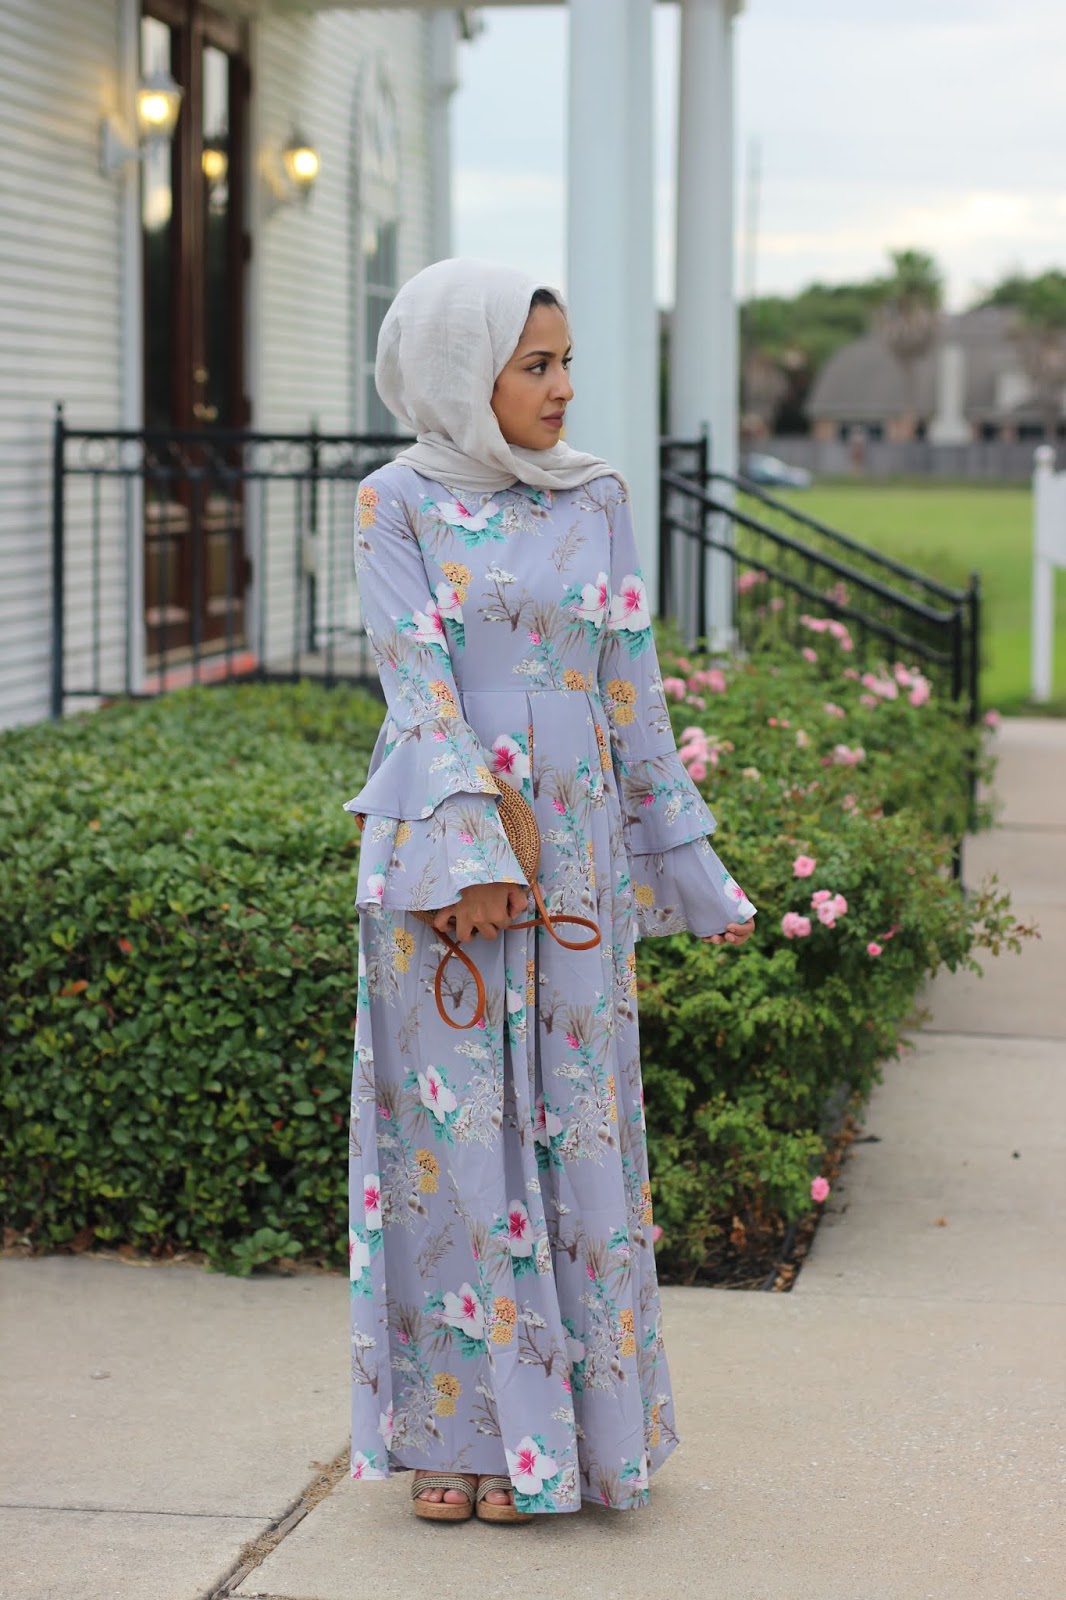 Delicate hijabi